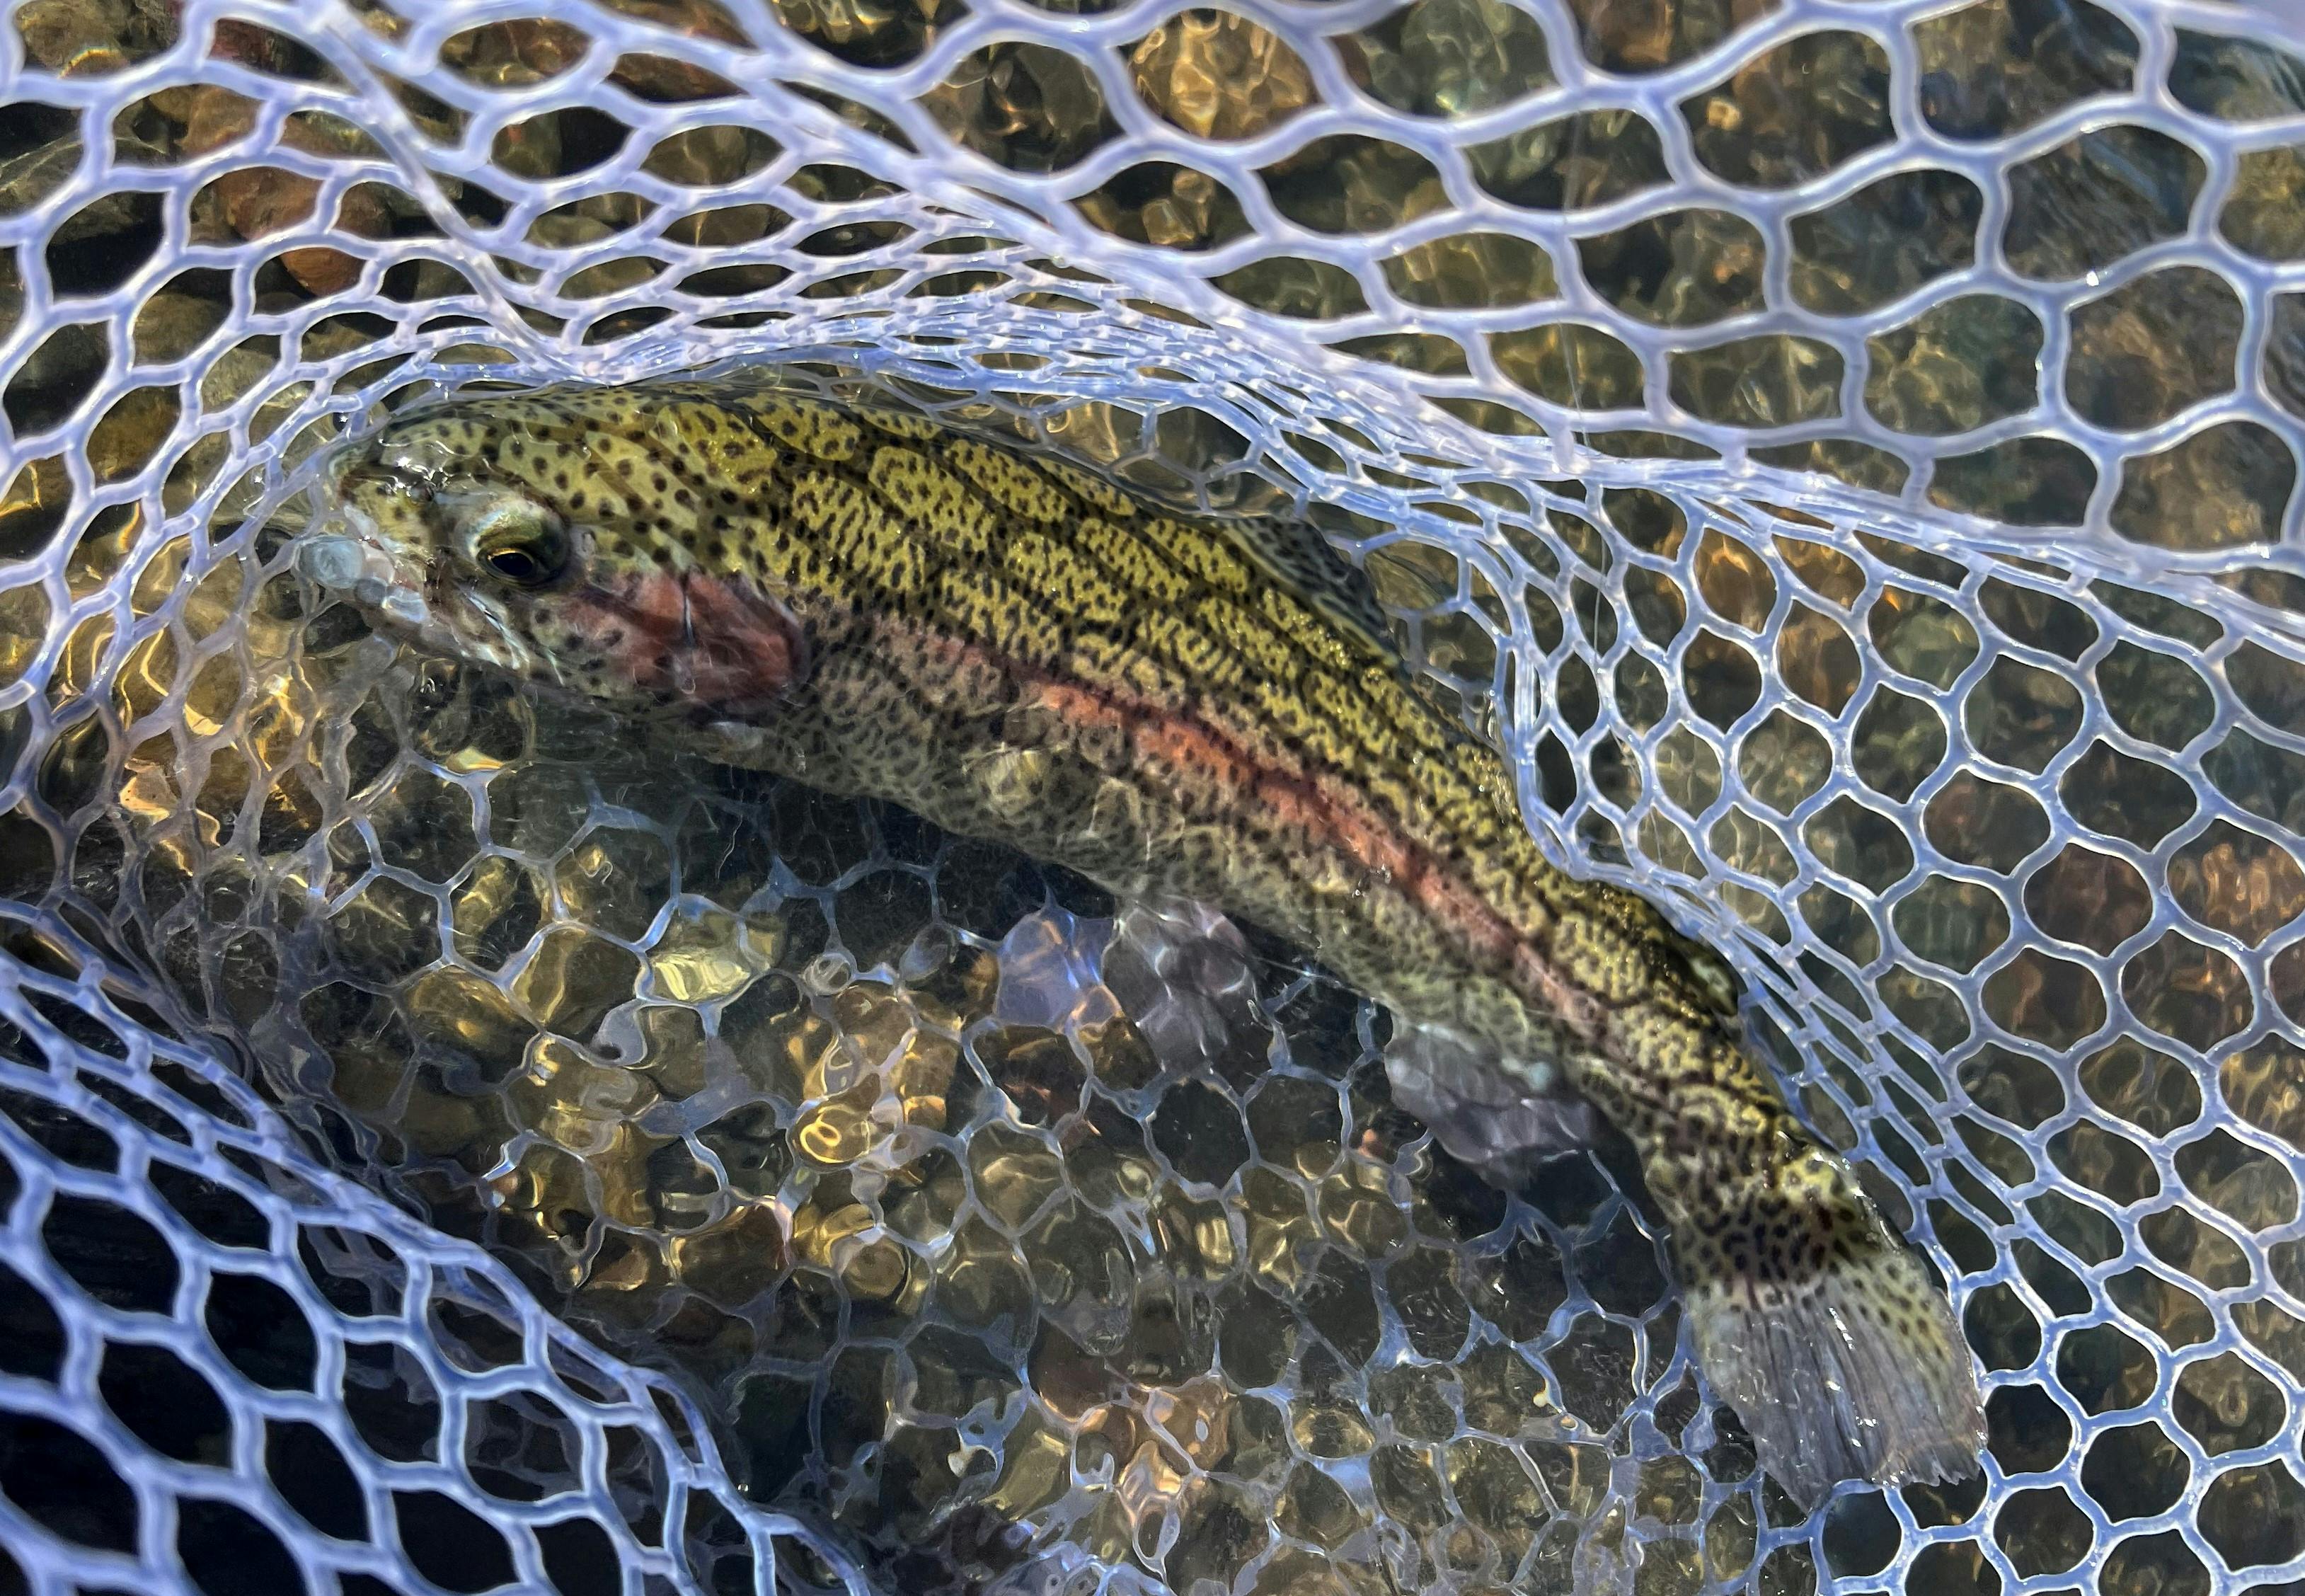 A trout in a net.